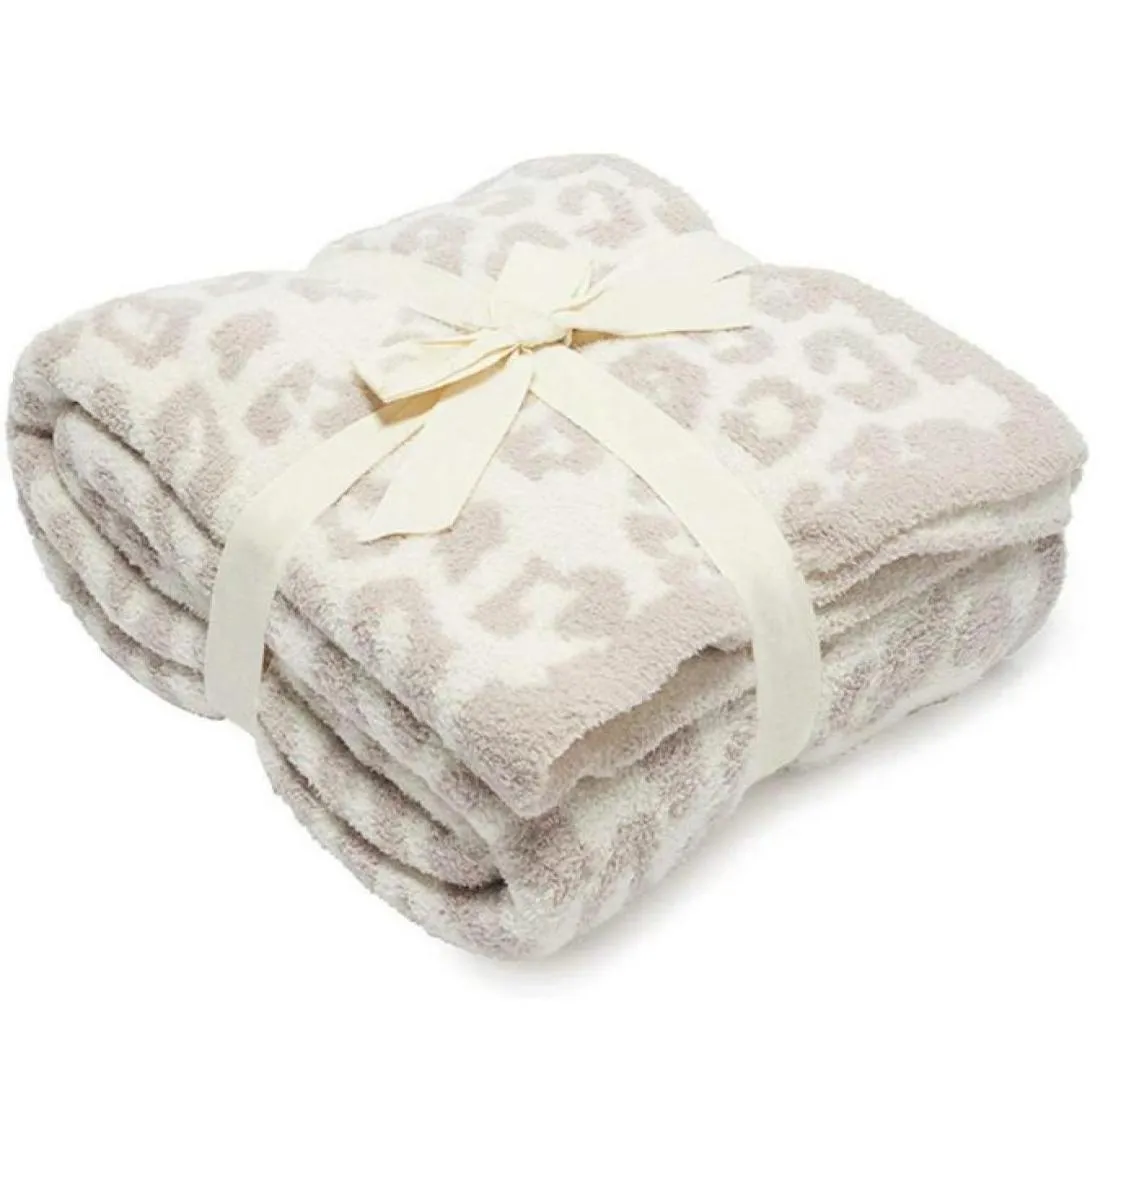 Sherpa Throw Blanket Fuzzy Fluffy Cozy Soft Blankets Fleece Flannel Plush 127x162cm 130x180cm Microfiber Blanket for Bed Sofa3510314